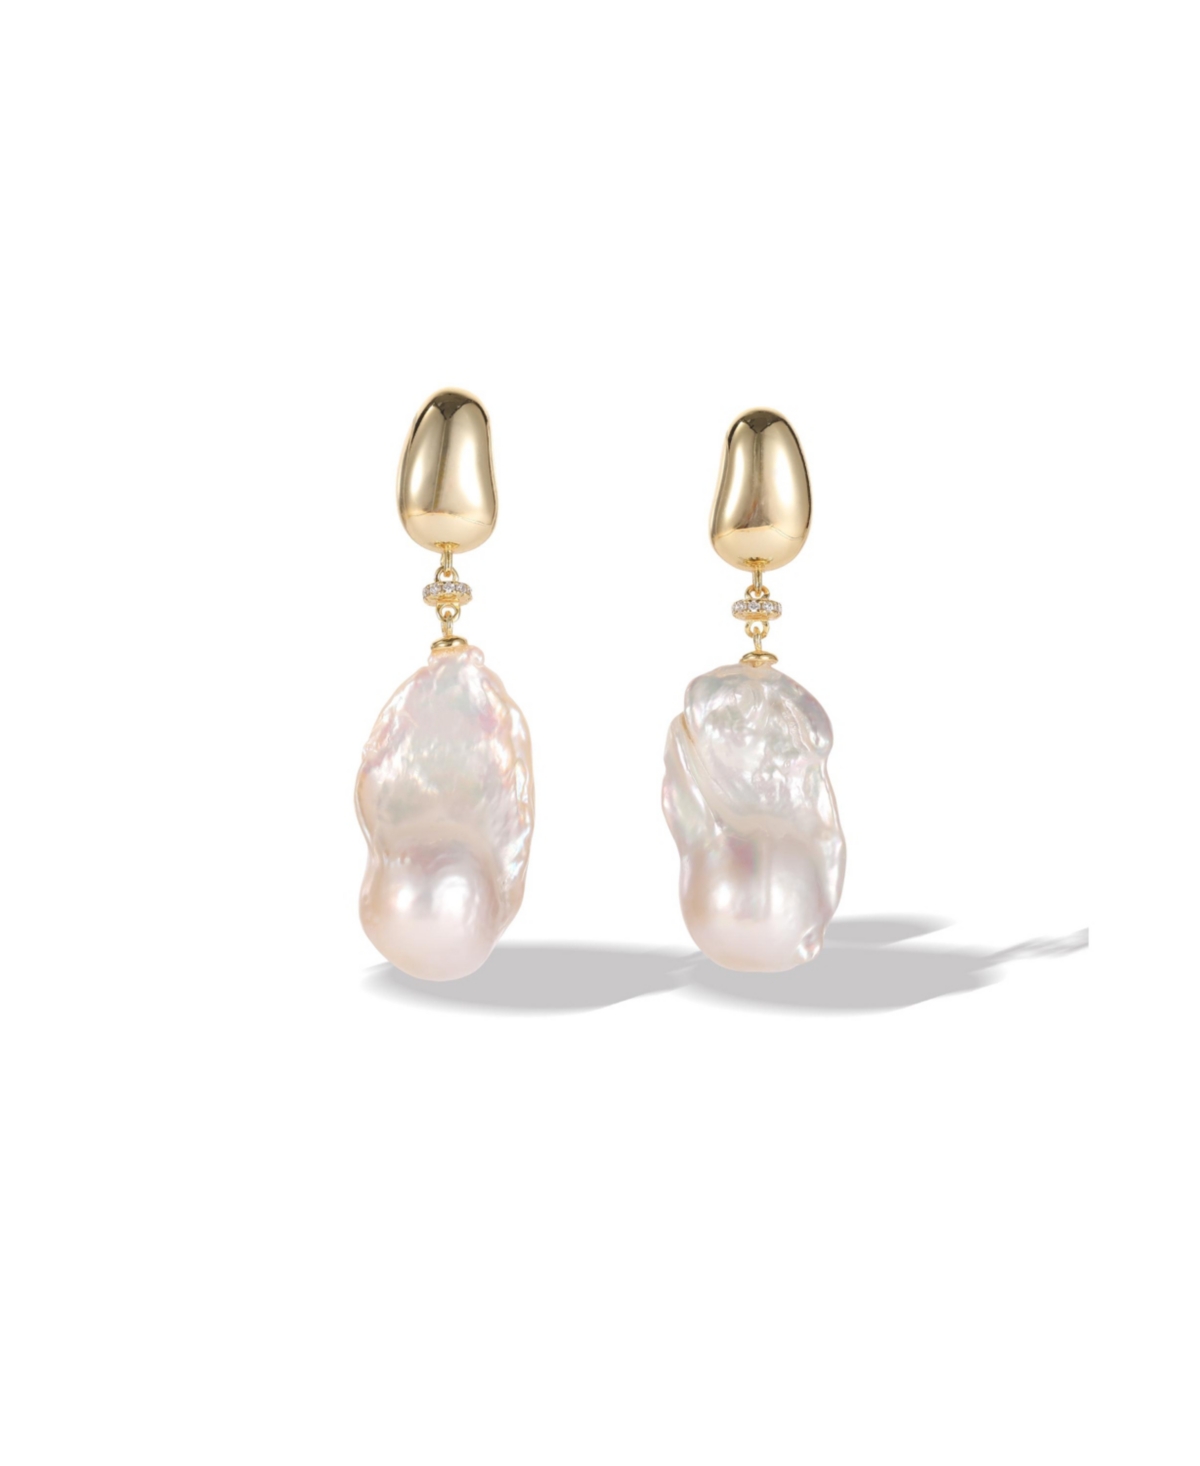 Doris Large Freshwater Baroque Pearl Drop Earrings - Gold